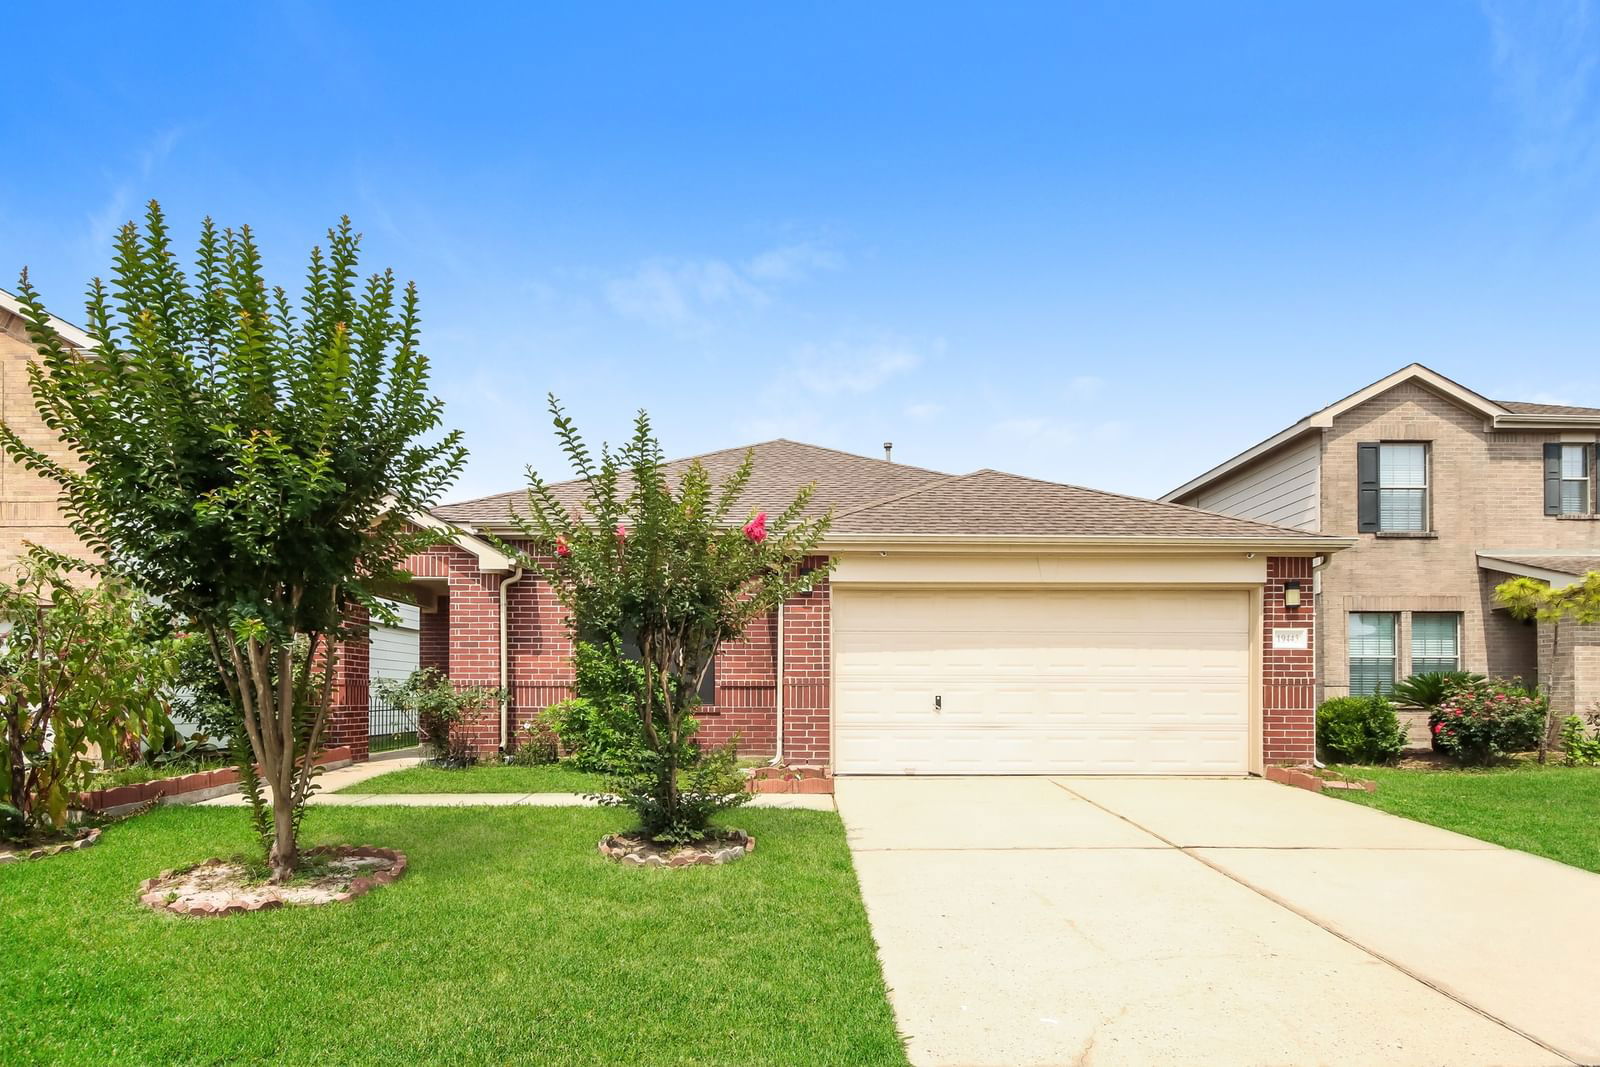 Real estate property located at 19443 Remington Park, Harris, Remington Ranch Sec 01, Houston, TX, US